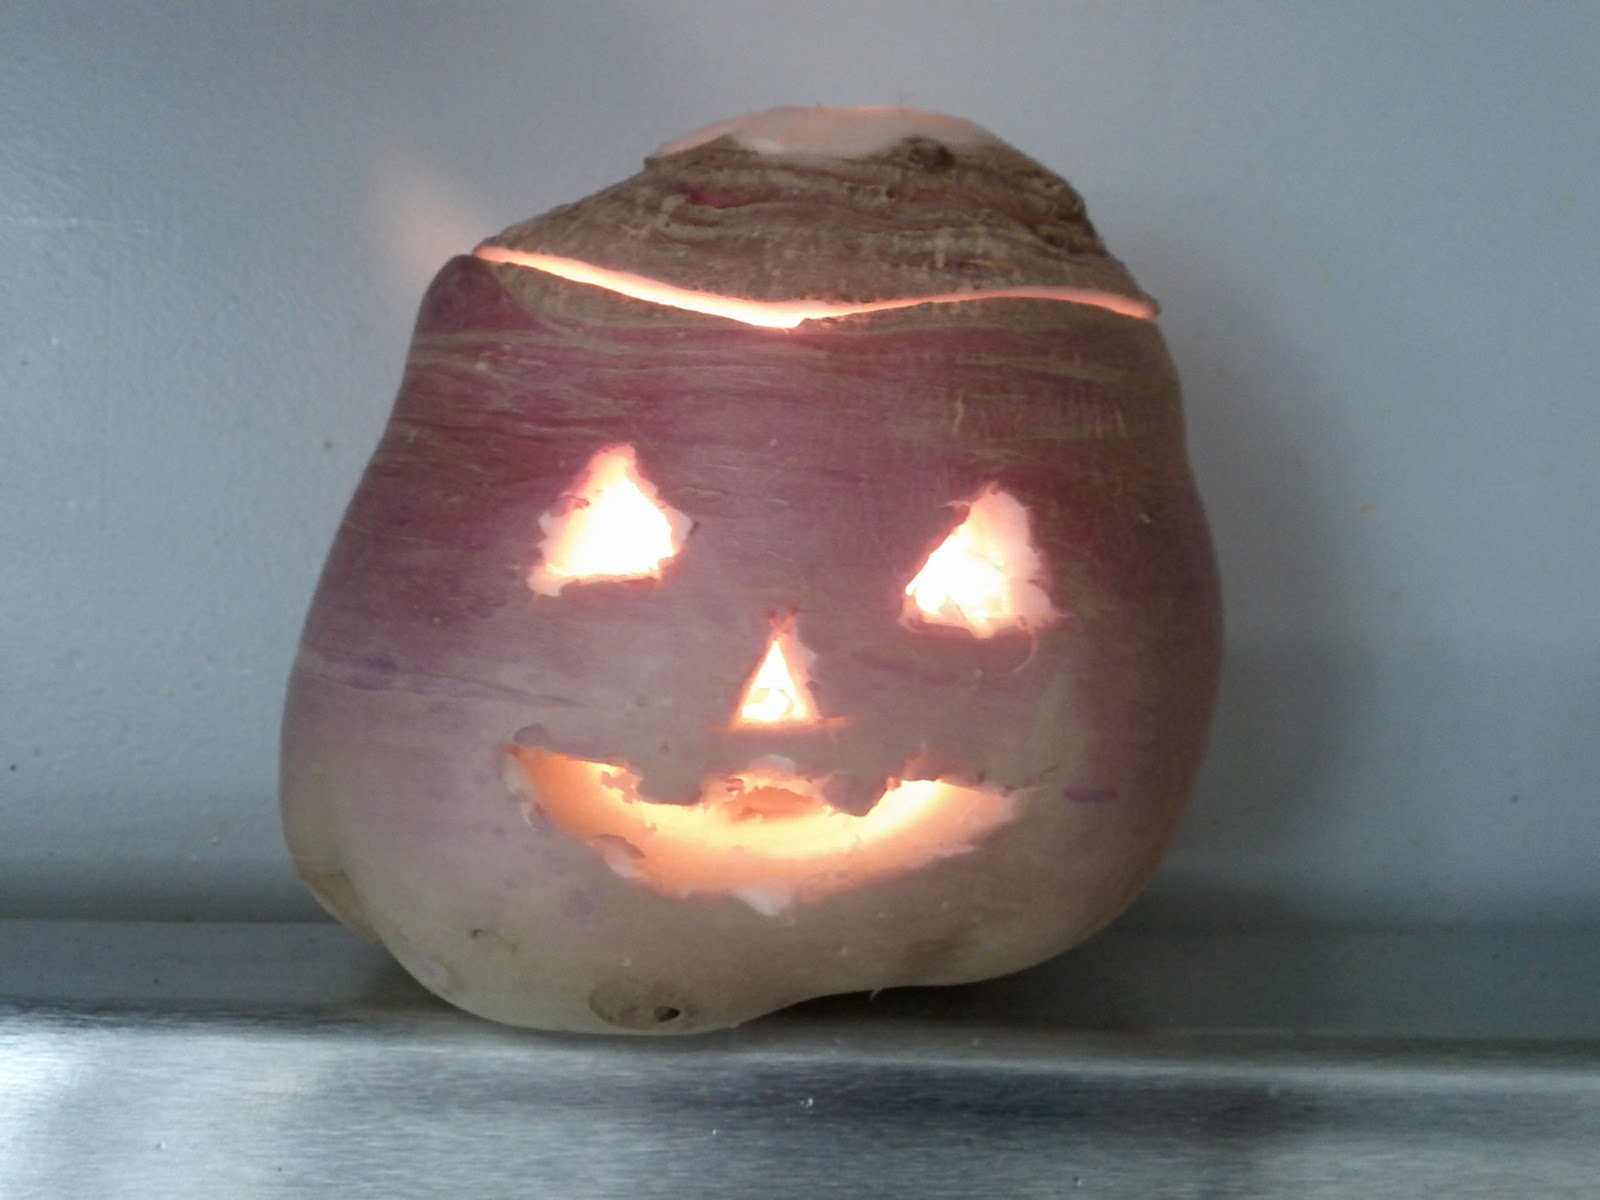 Carved turnip